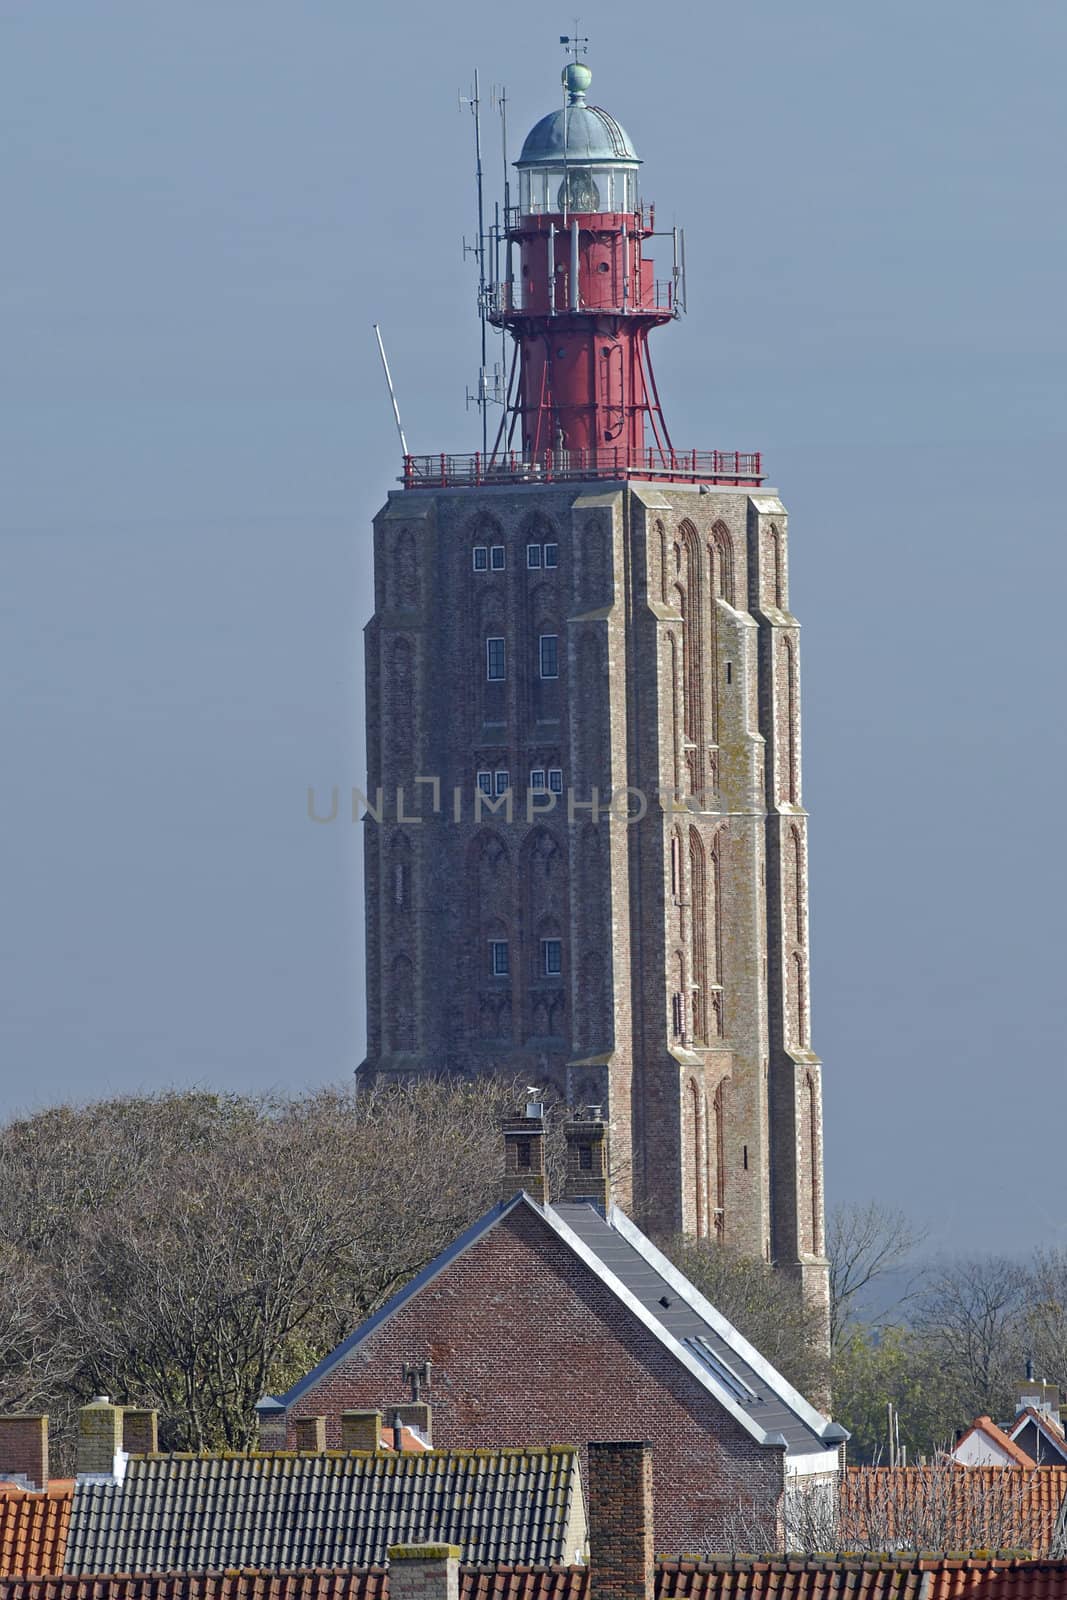 Lighthouse by Gertje